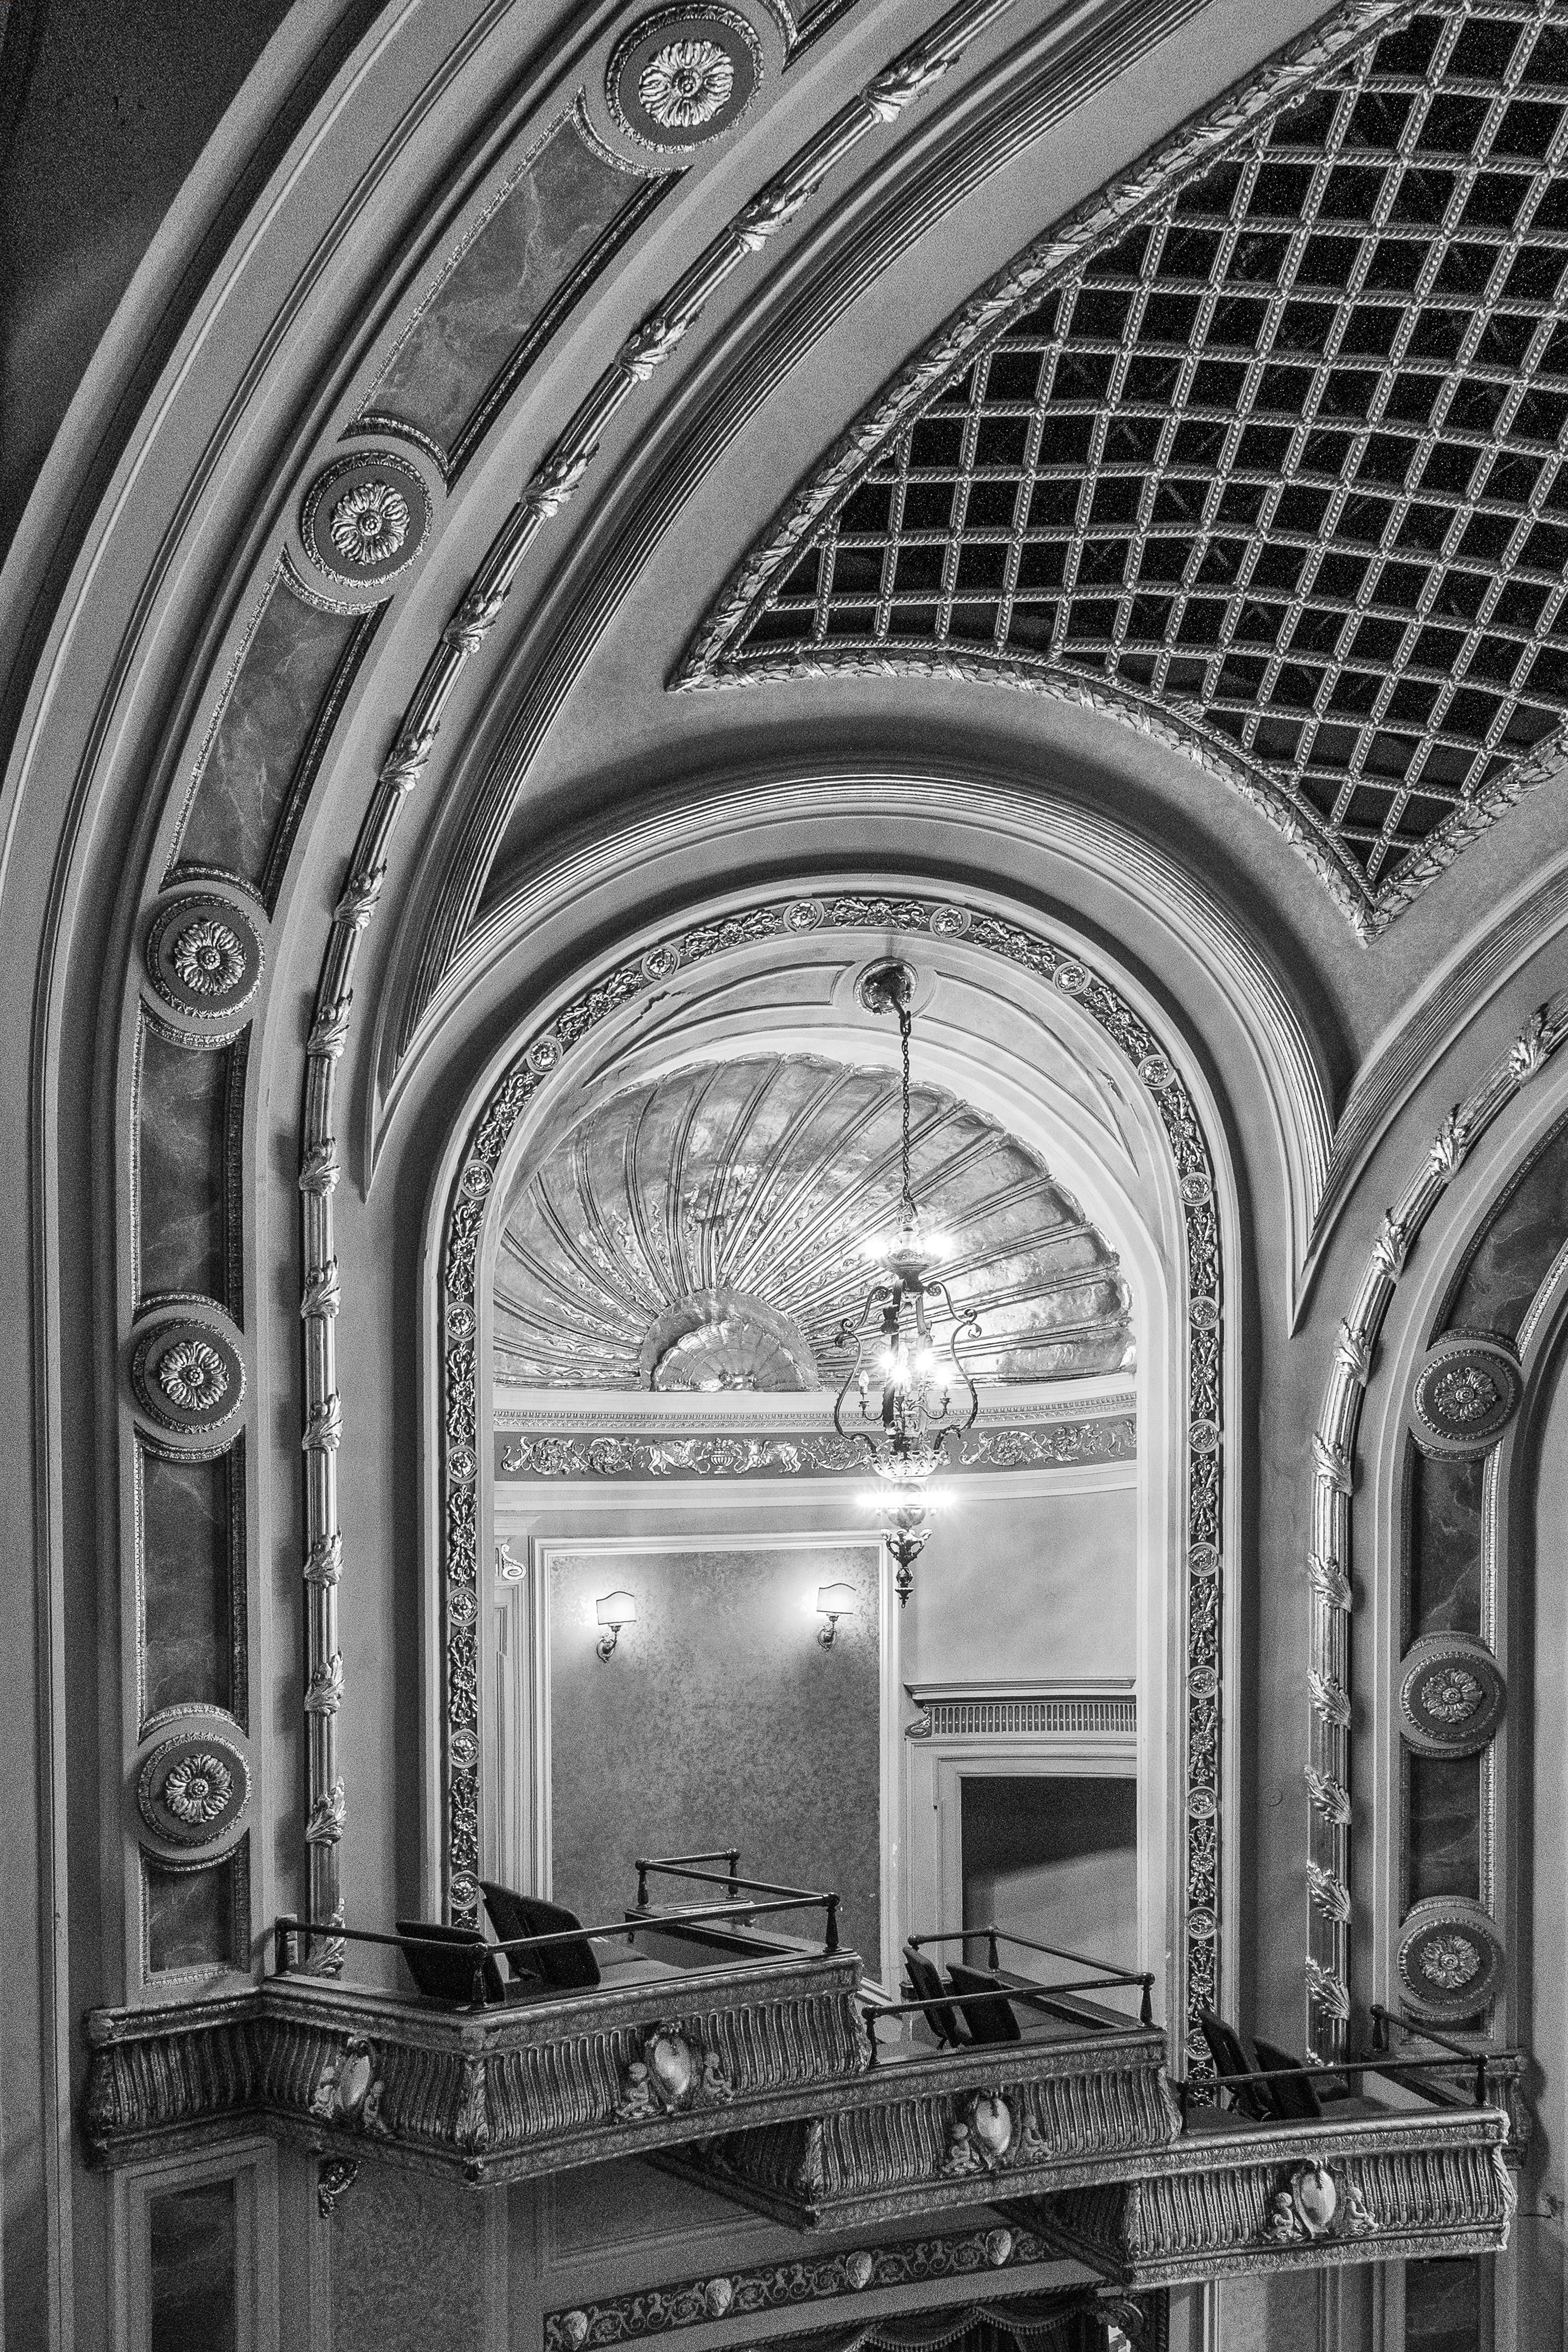 Myrtie Cope Black and White Photograph – ""Tivoli Theater, Loggia"" - Architekturfotografie - Ezra Stoller